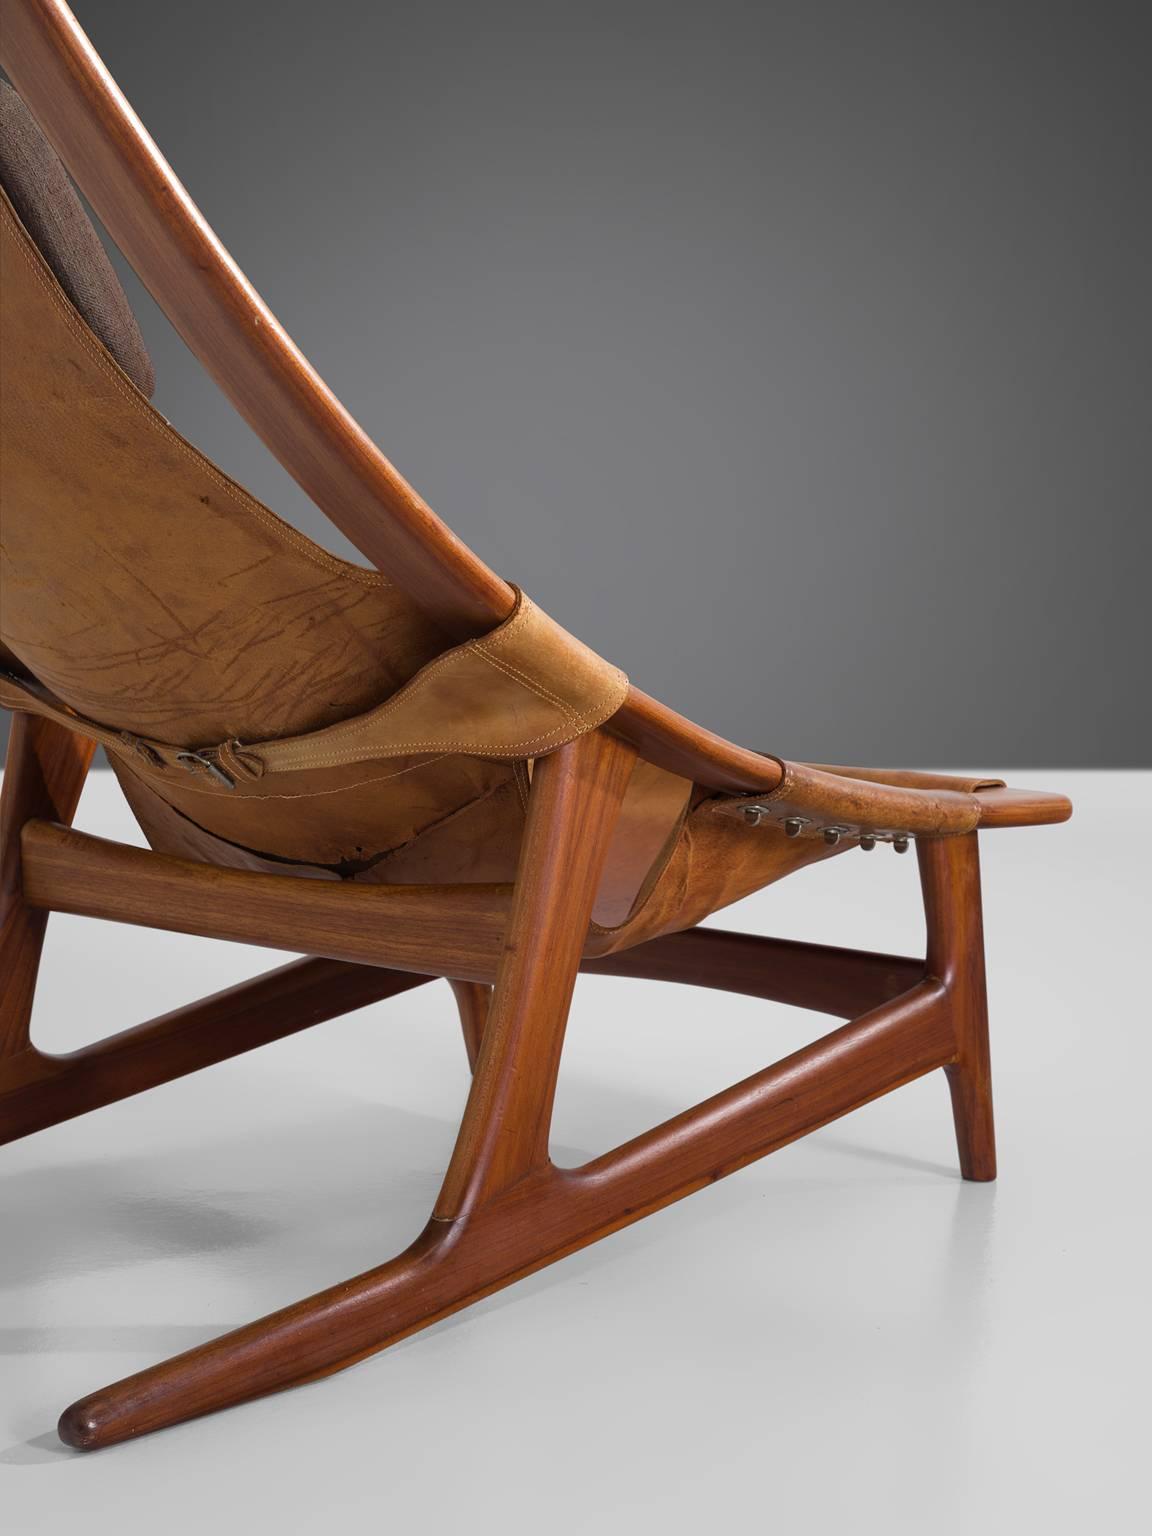 Arne Tidemand Ruud 'Holmkollen' Lounge Chair for Norcraft 1